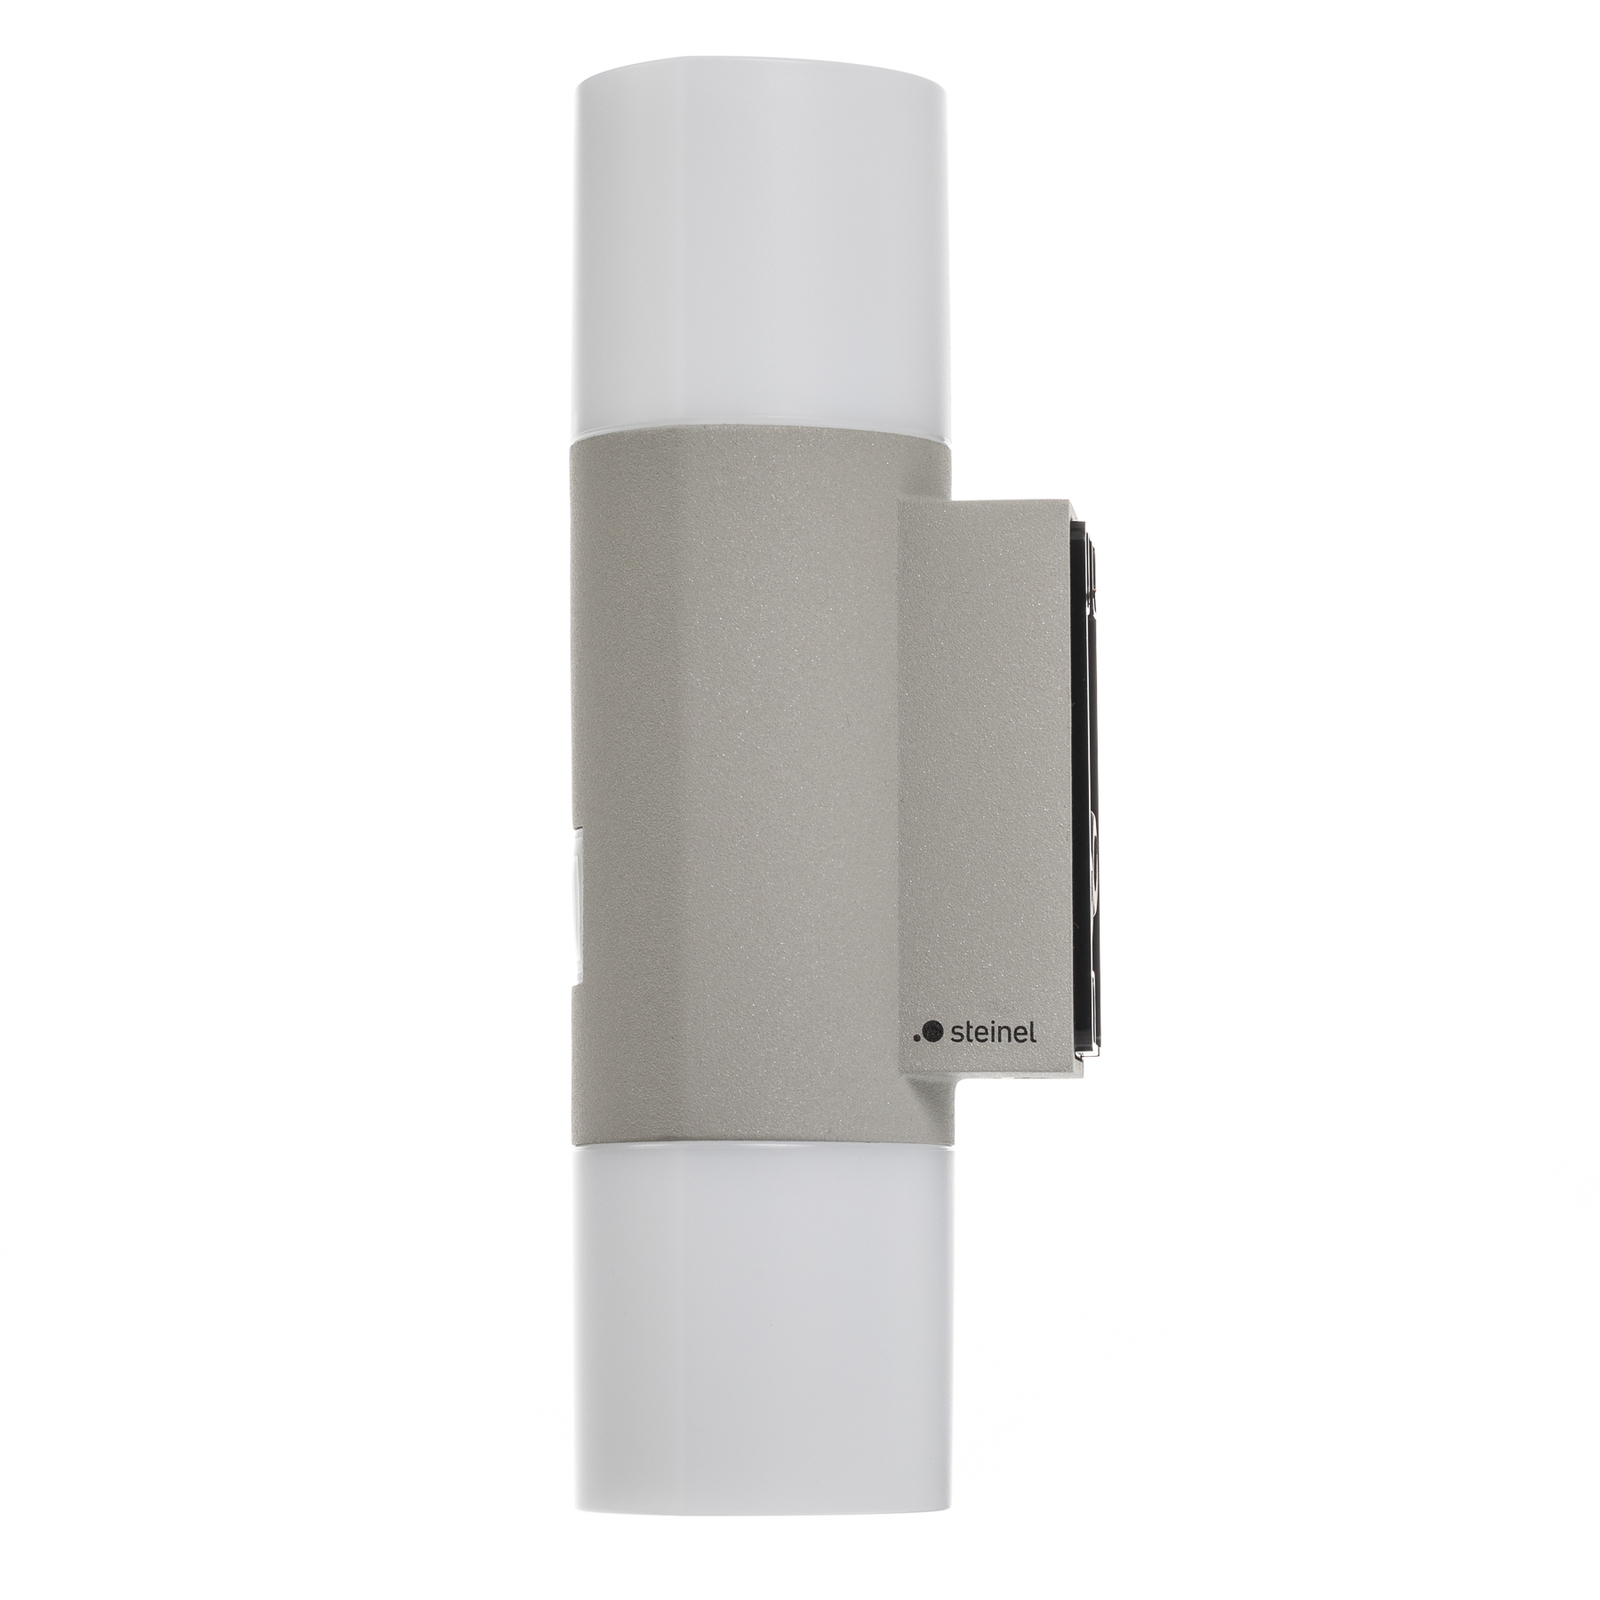 STEINEL L 910 S sensor outdoor wall light, silver